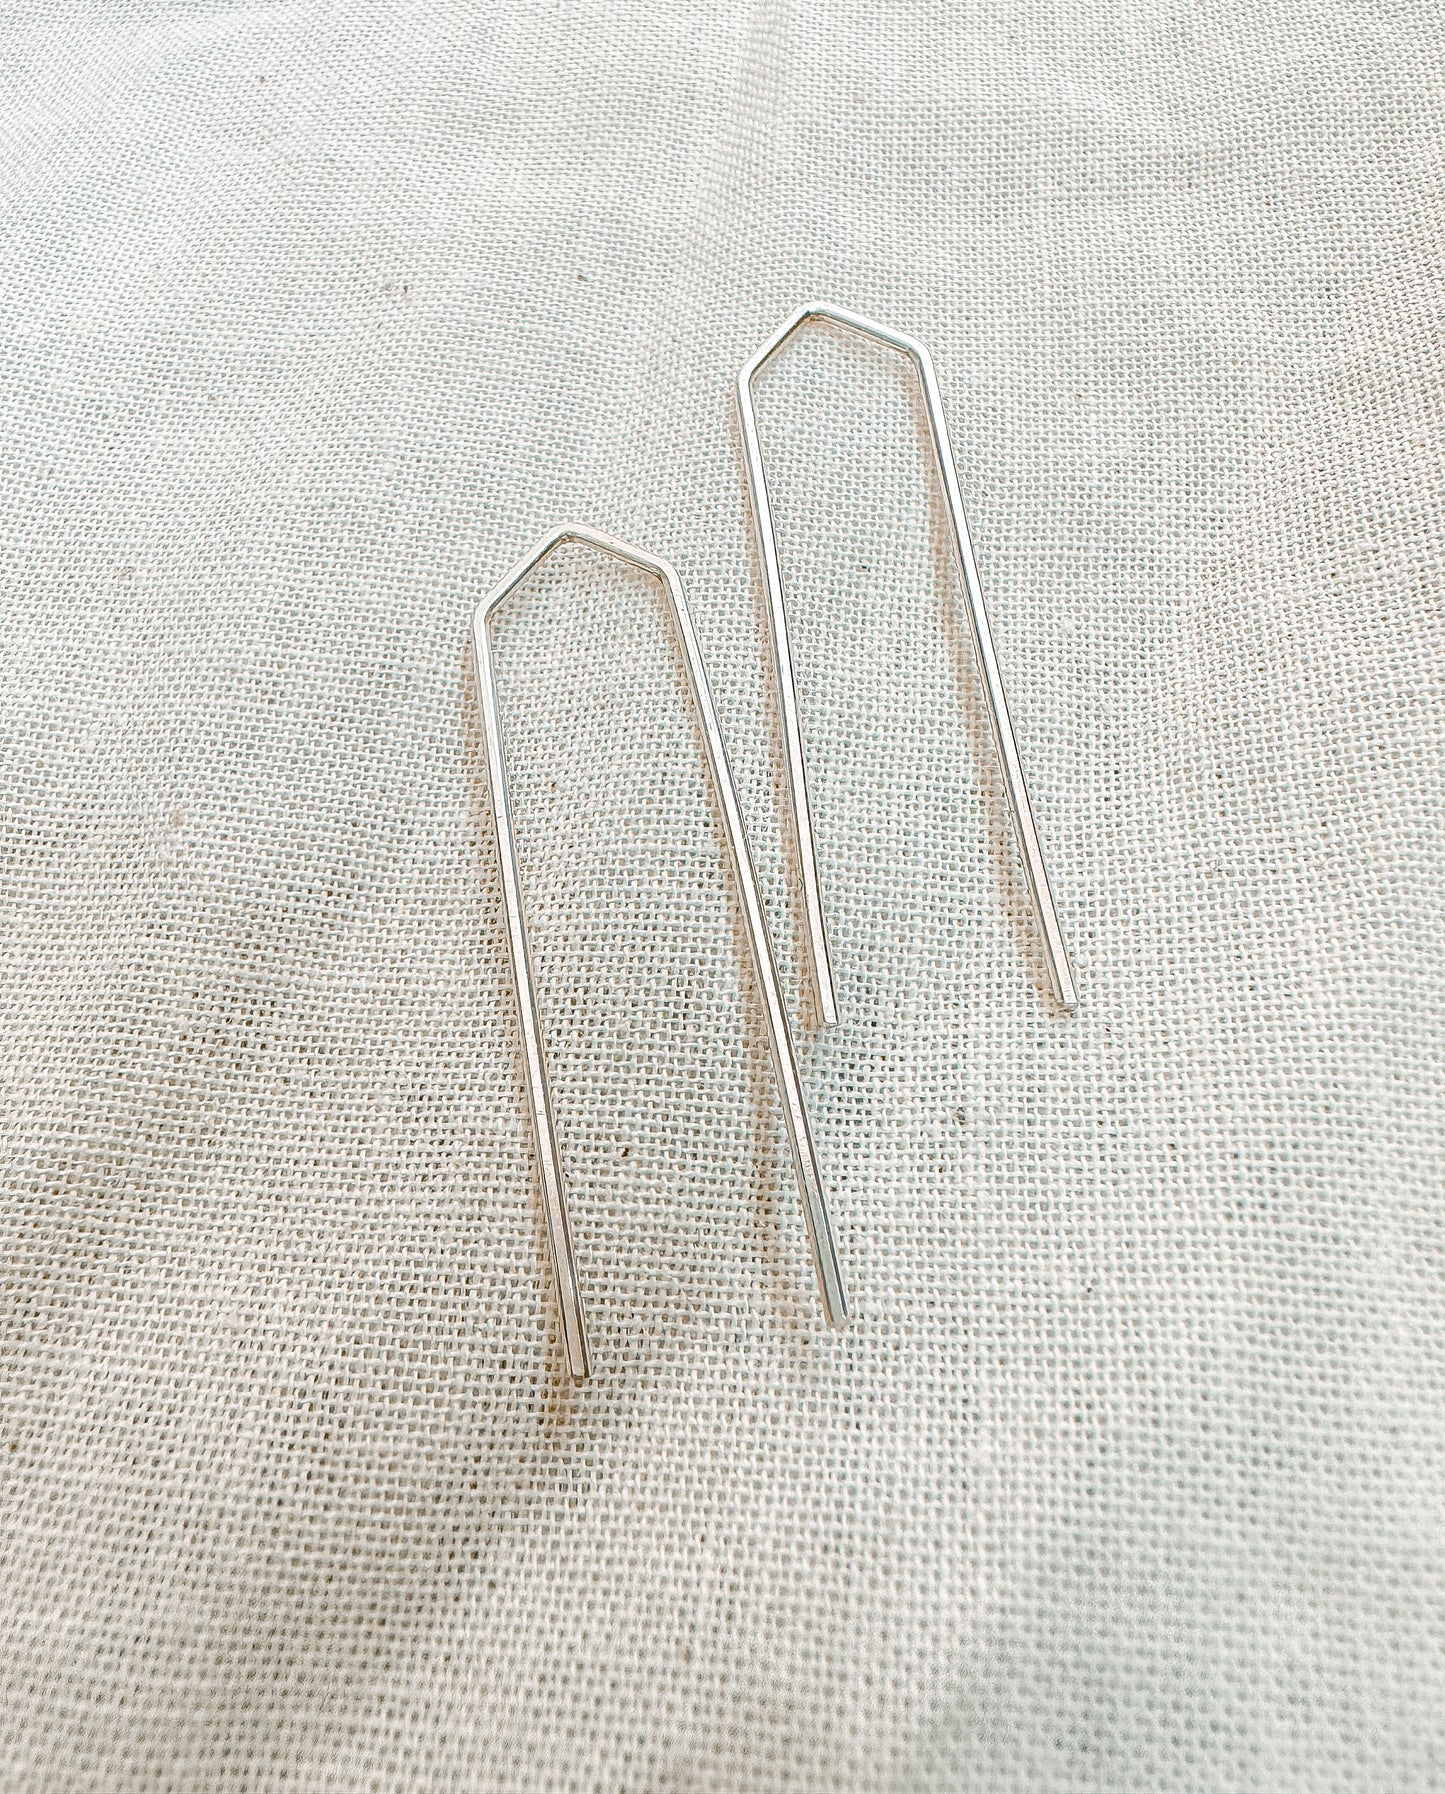 BAR | Minimalist sterling silver earrings, simple